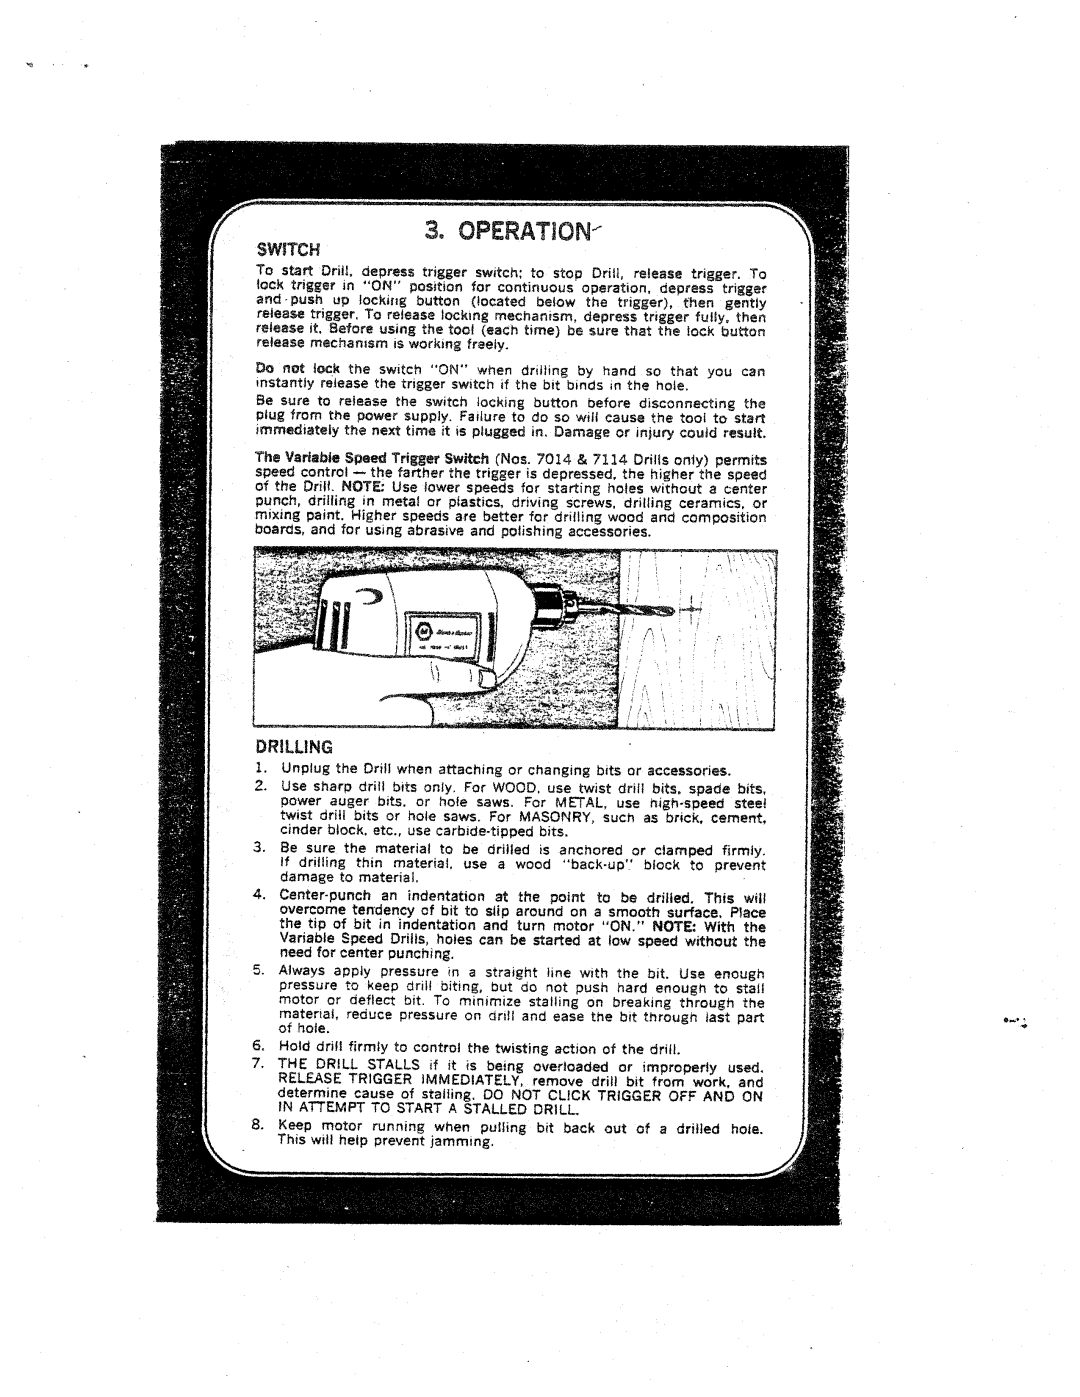 Black & Decker 7014, 7114 manual 